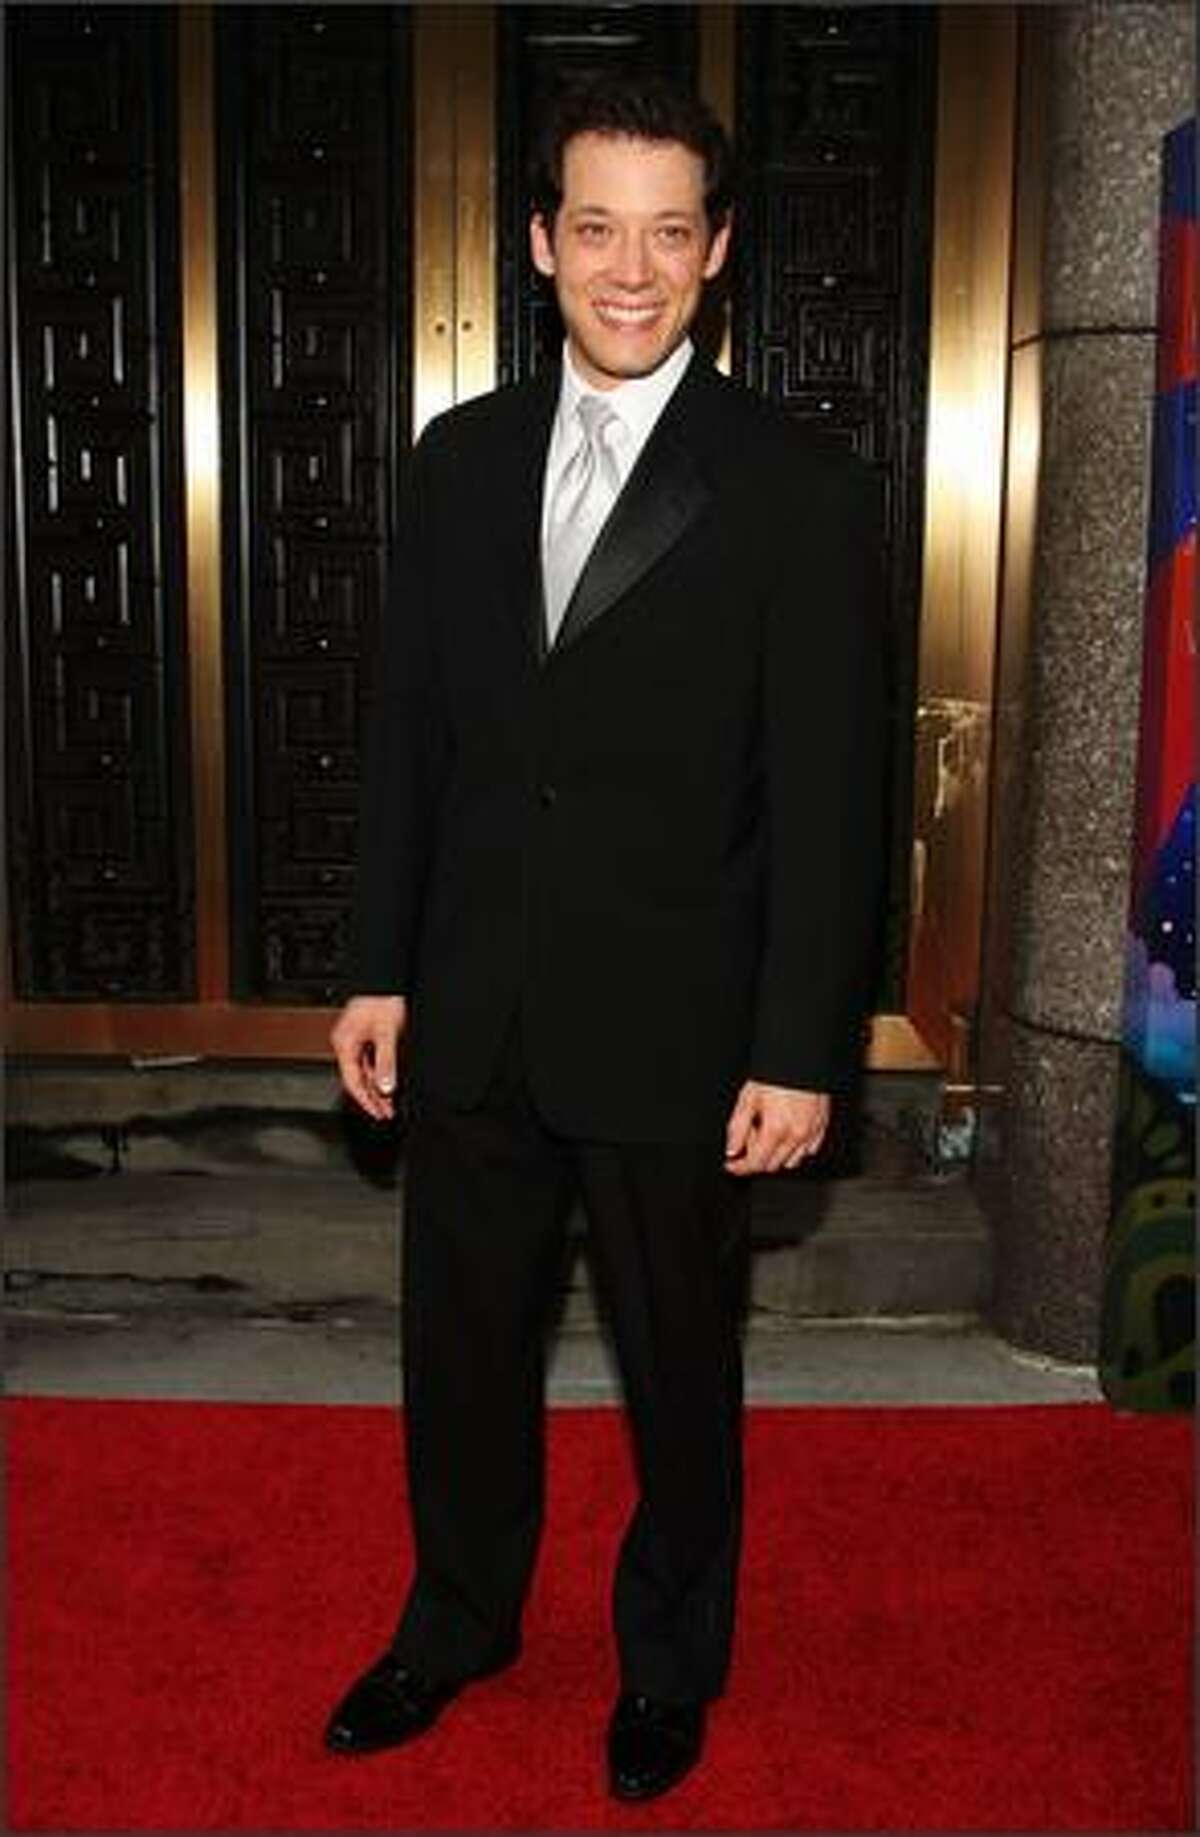 Actor John Tartaglia attends the 63rd Annual Tony Awards at Radio City Music Hall on Sunday in New York City.